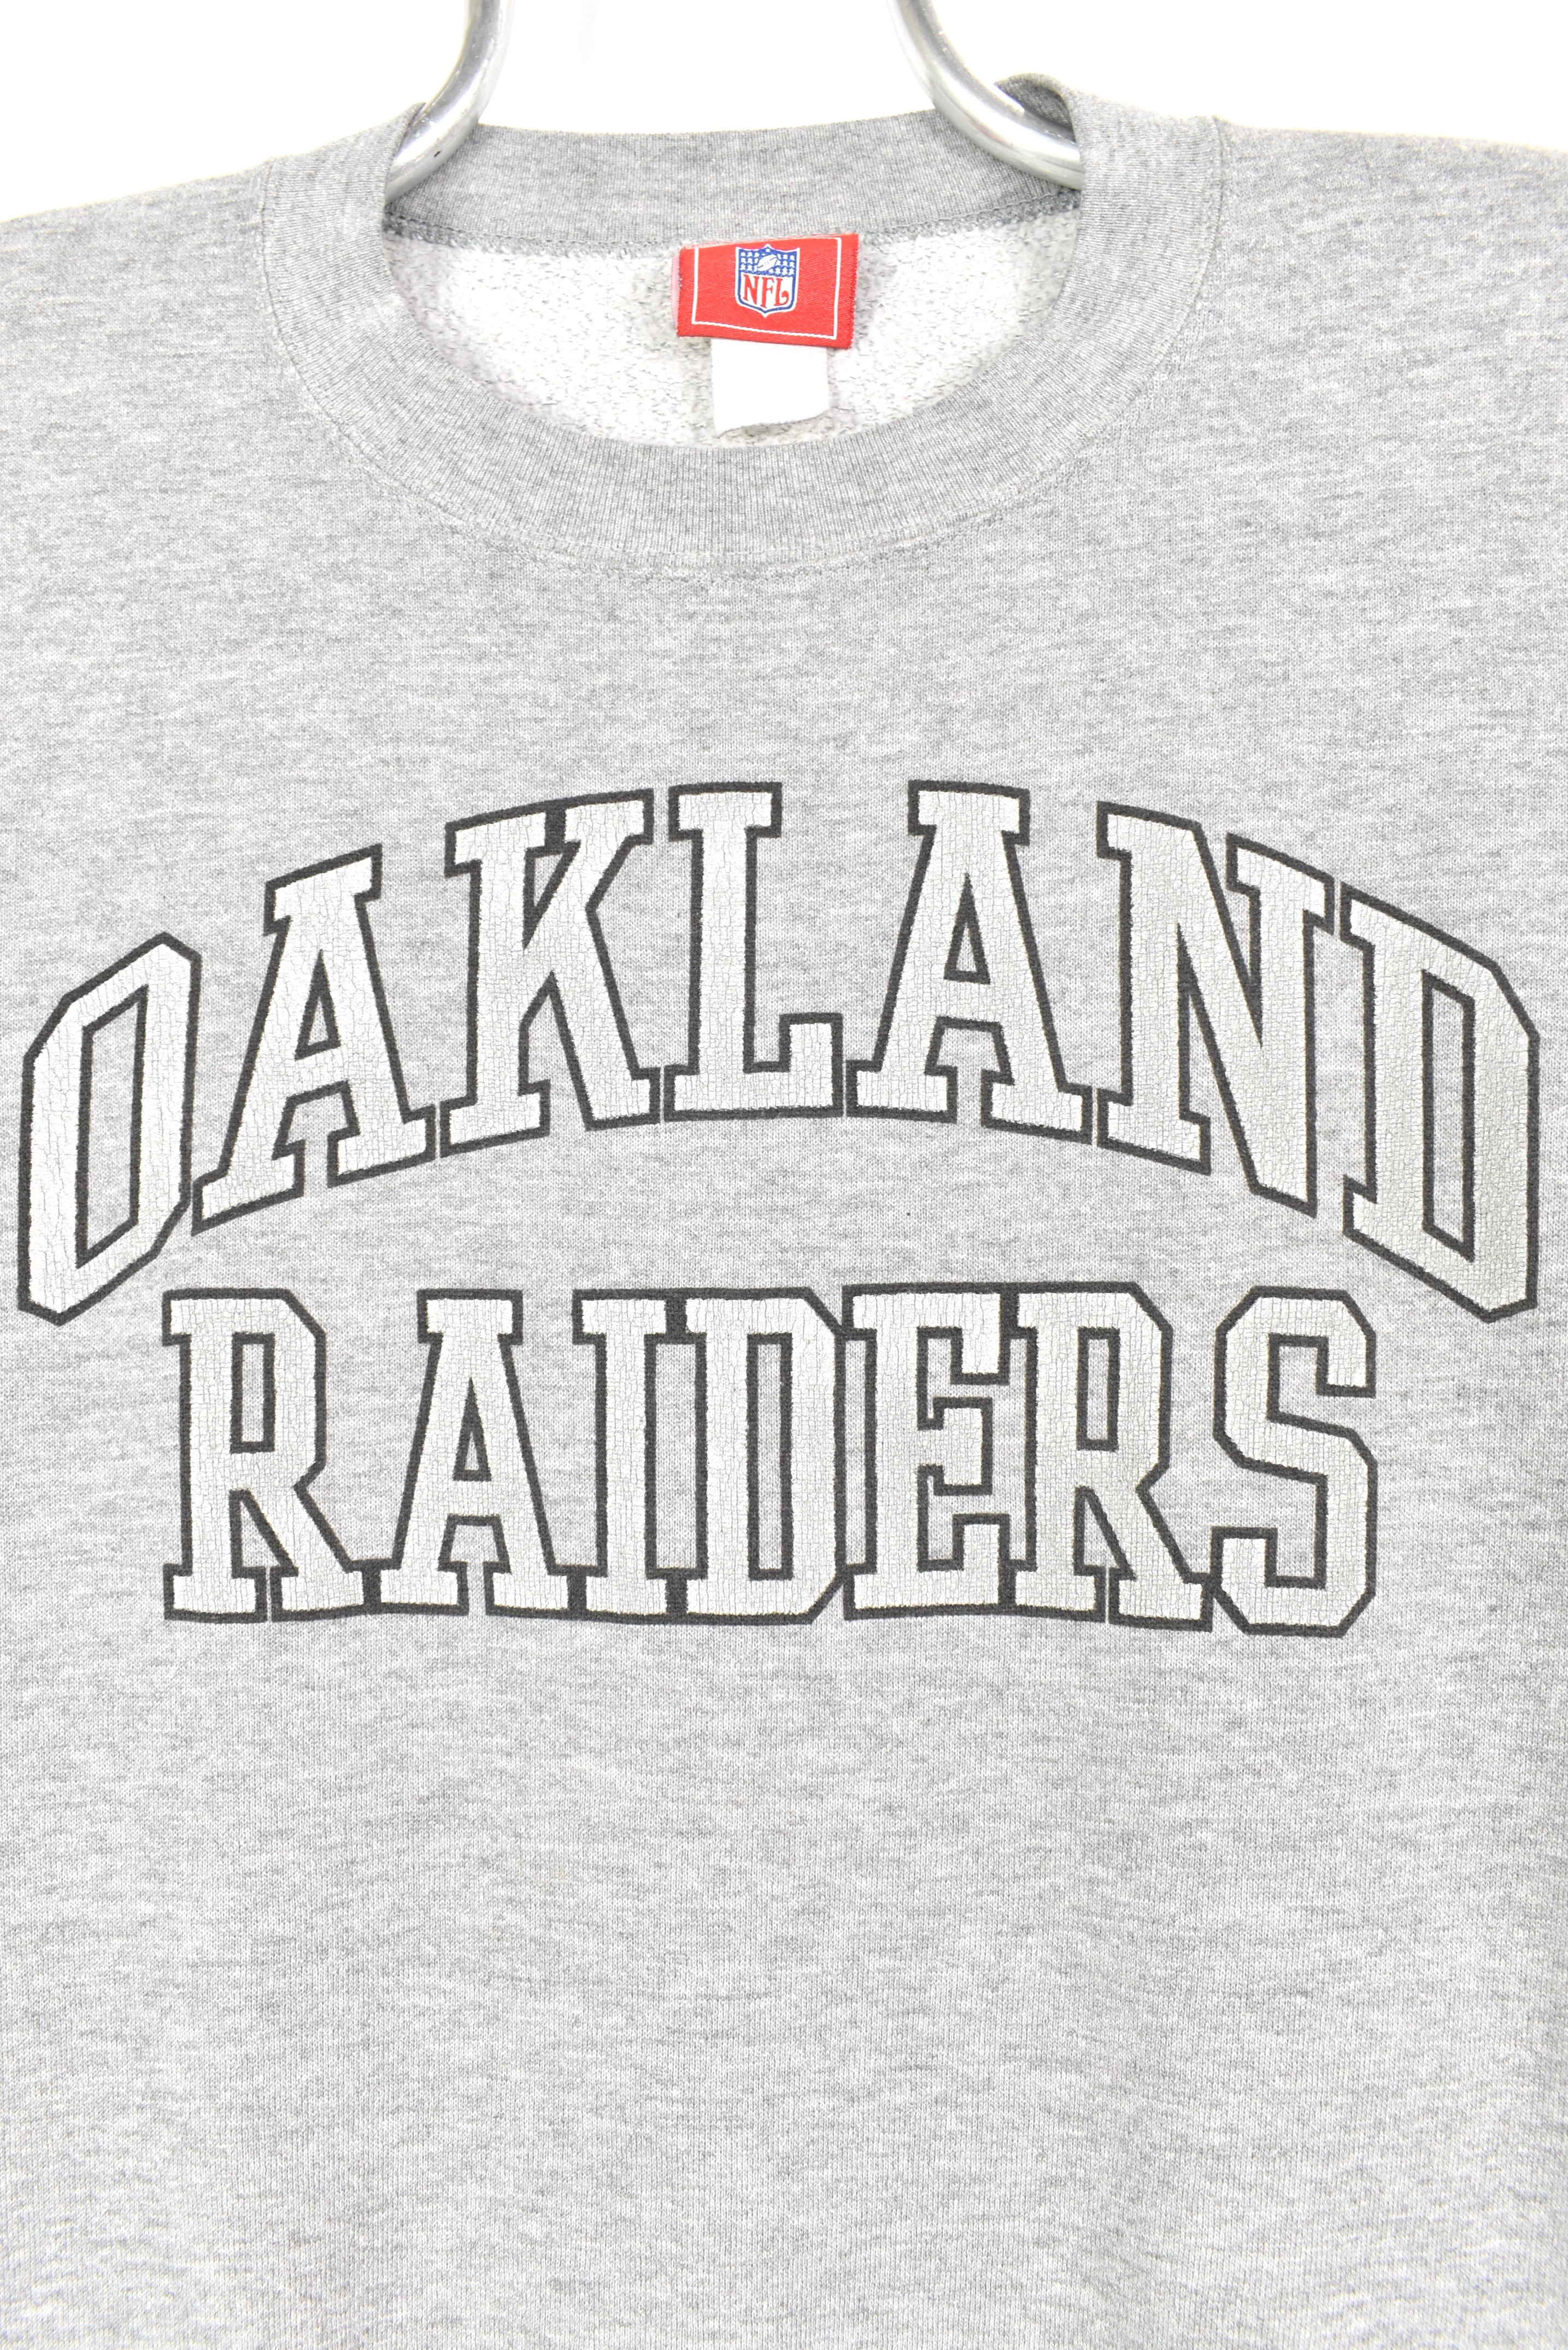 Vintage Oakland Raiders sweatshirt, NFL grey graphic crewneck - AU XL PRO SPORT